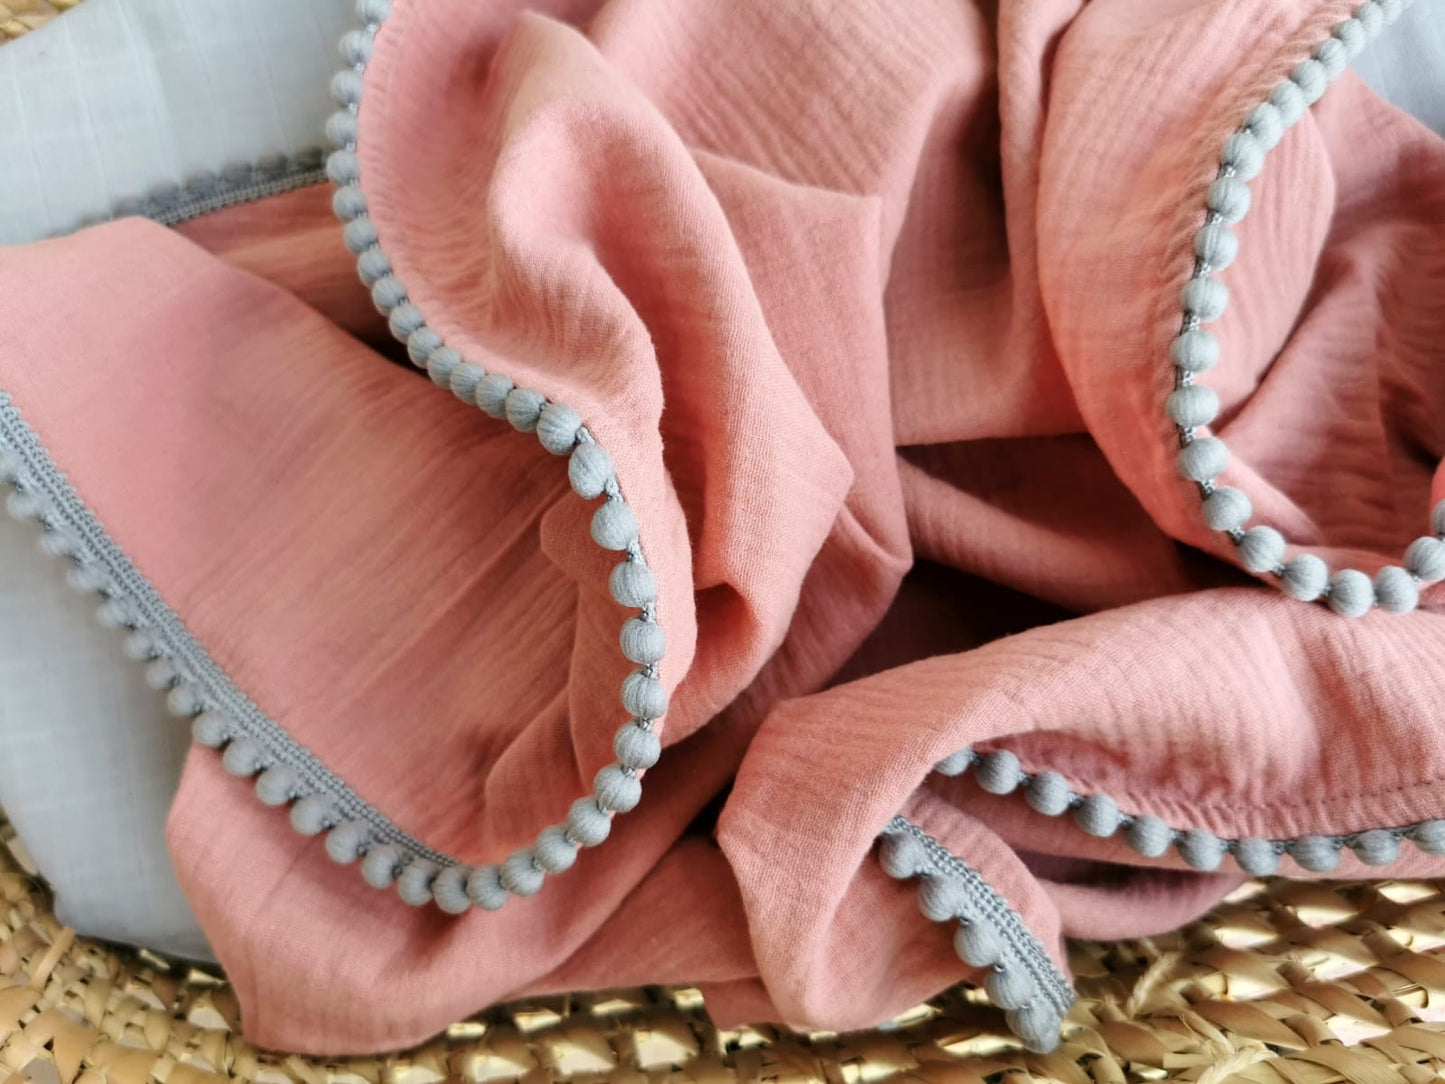 Organic Cotton muslin Pom Pom swaddle blanket - Old Pink